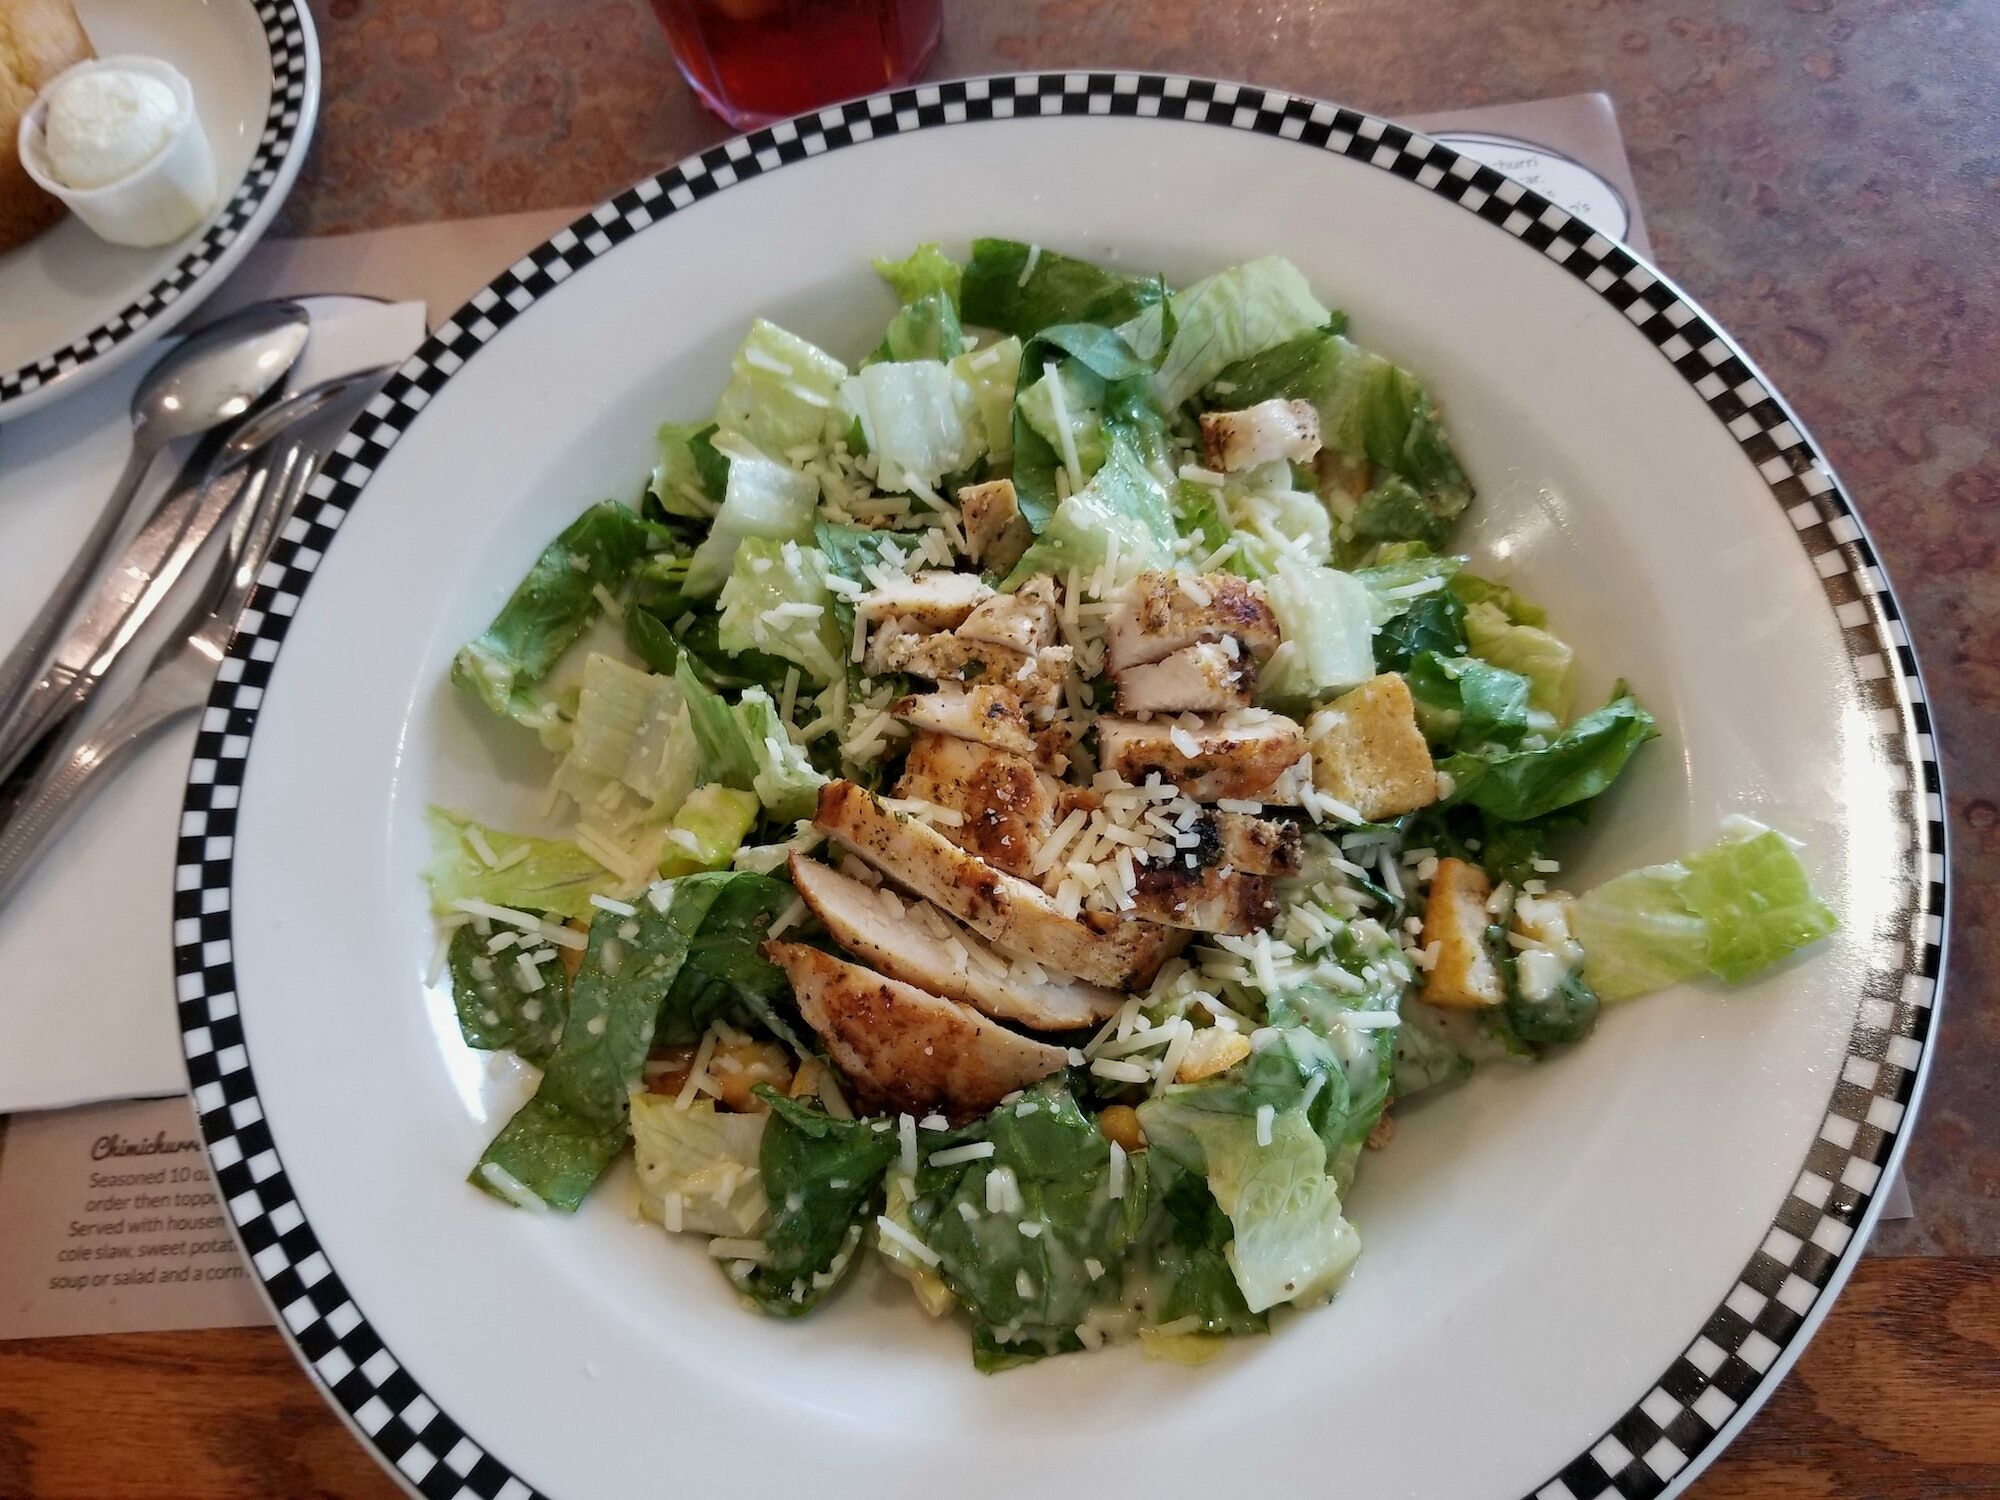 Chicken Caesar Salad!